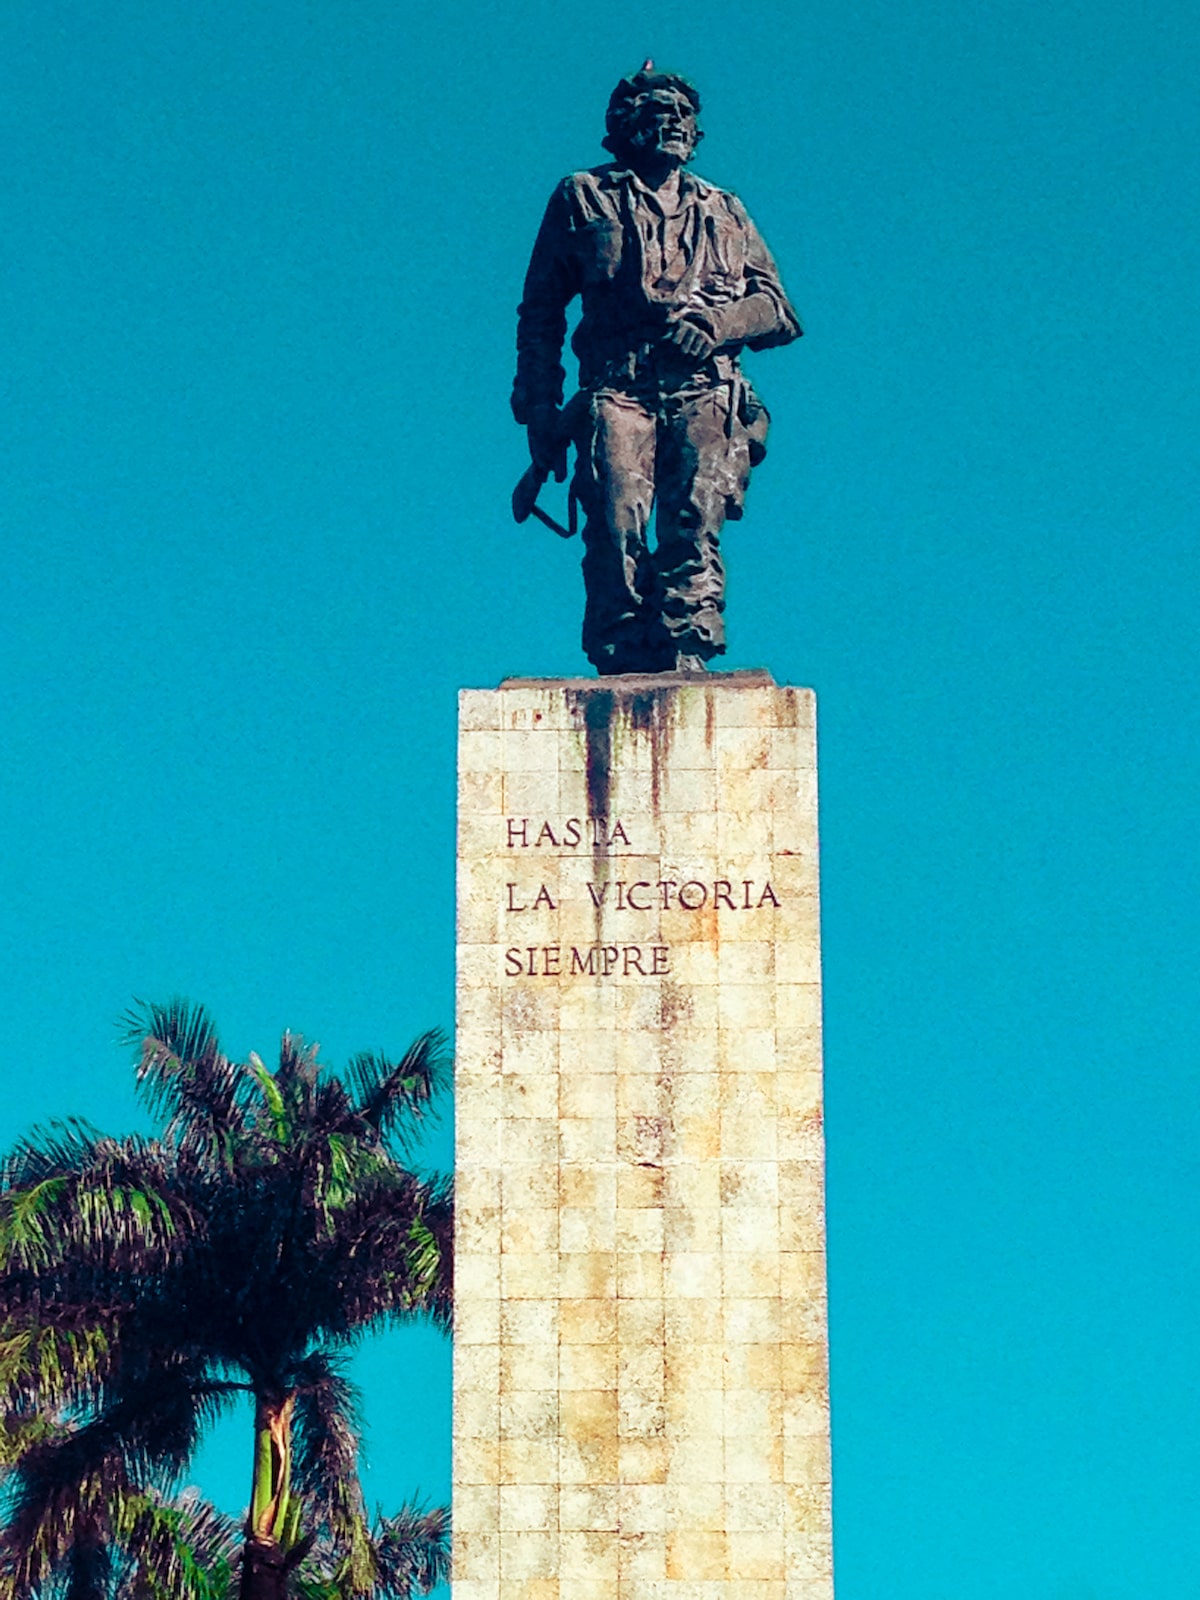 Che Guevara Mausoleum in Santa Clara, Cuba.